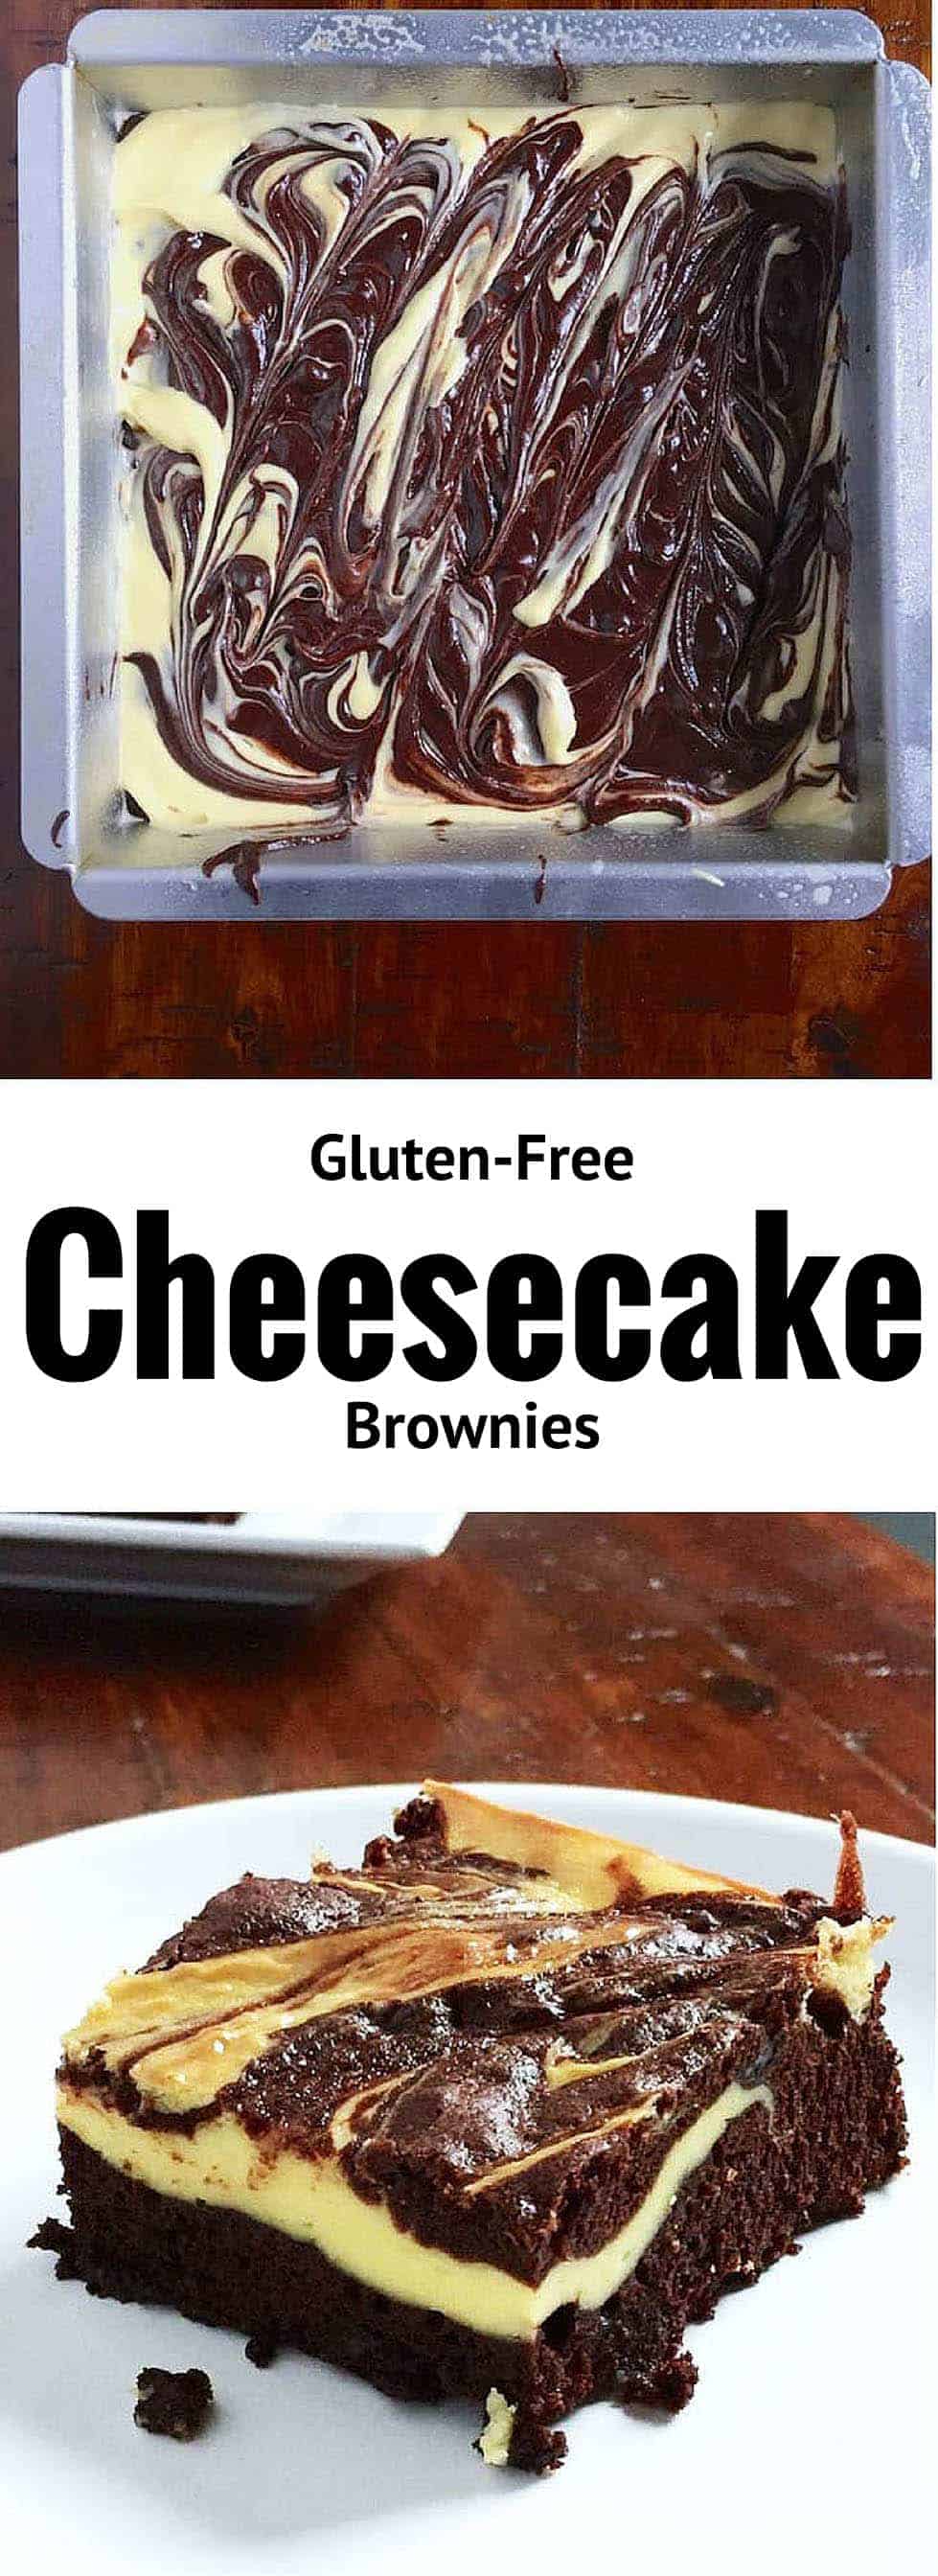 Gluten-Free Cheesecake Brownies